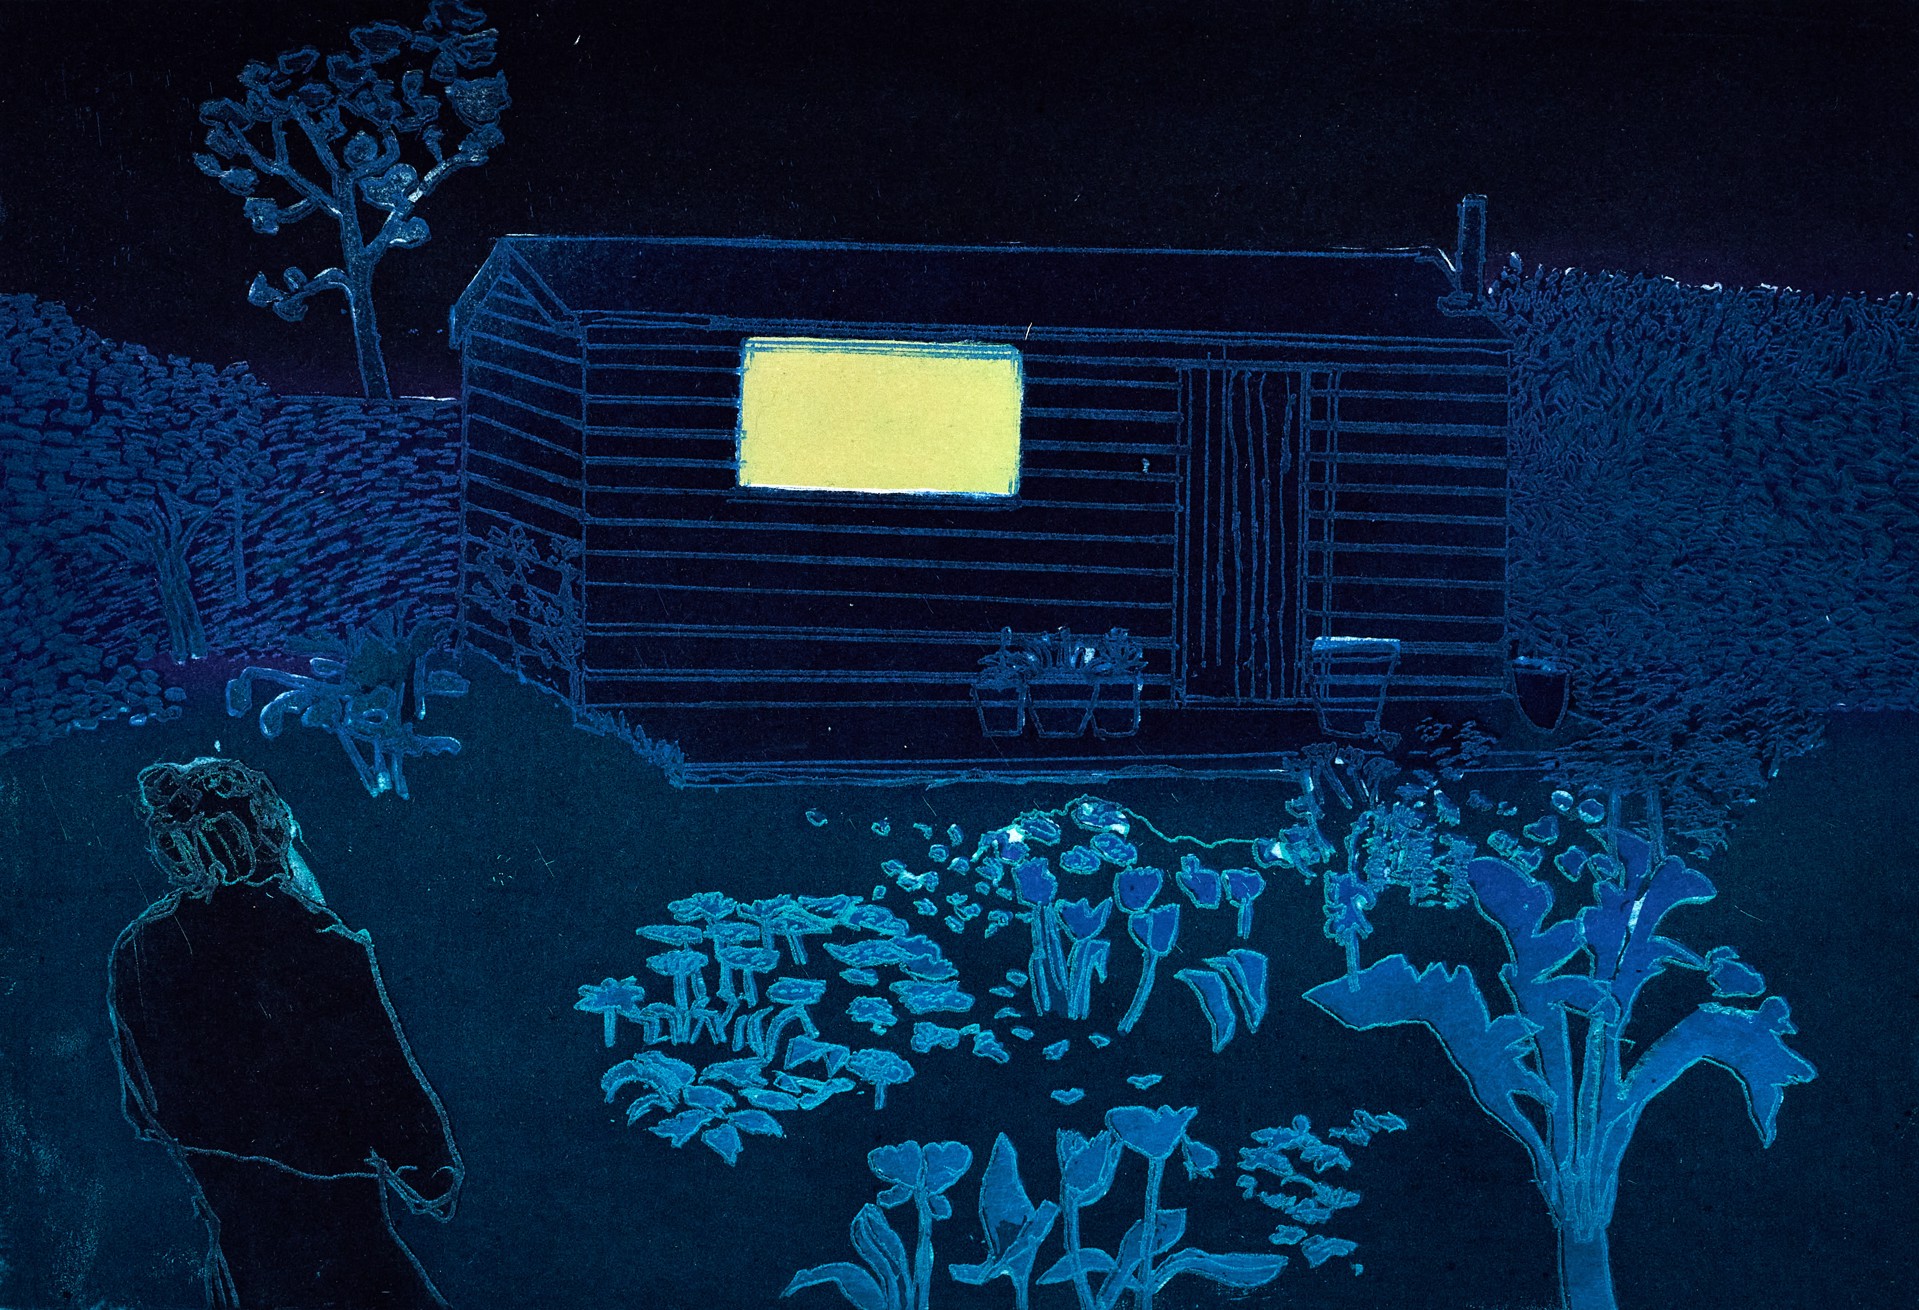 Night Studio by Tom Hammick